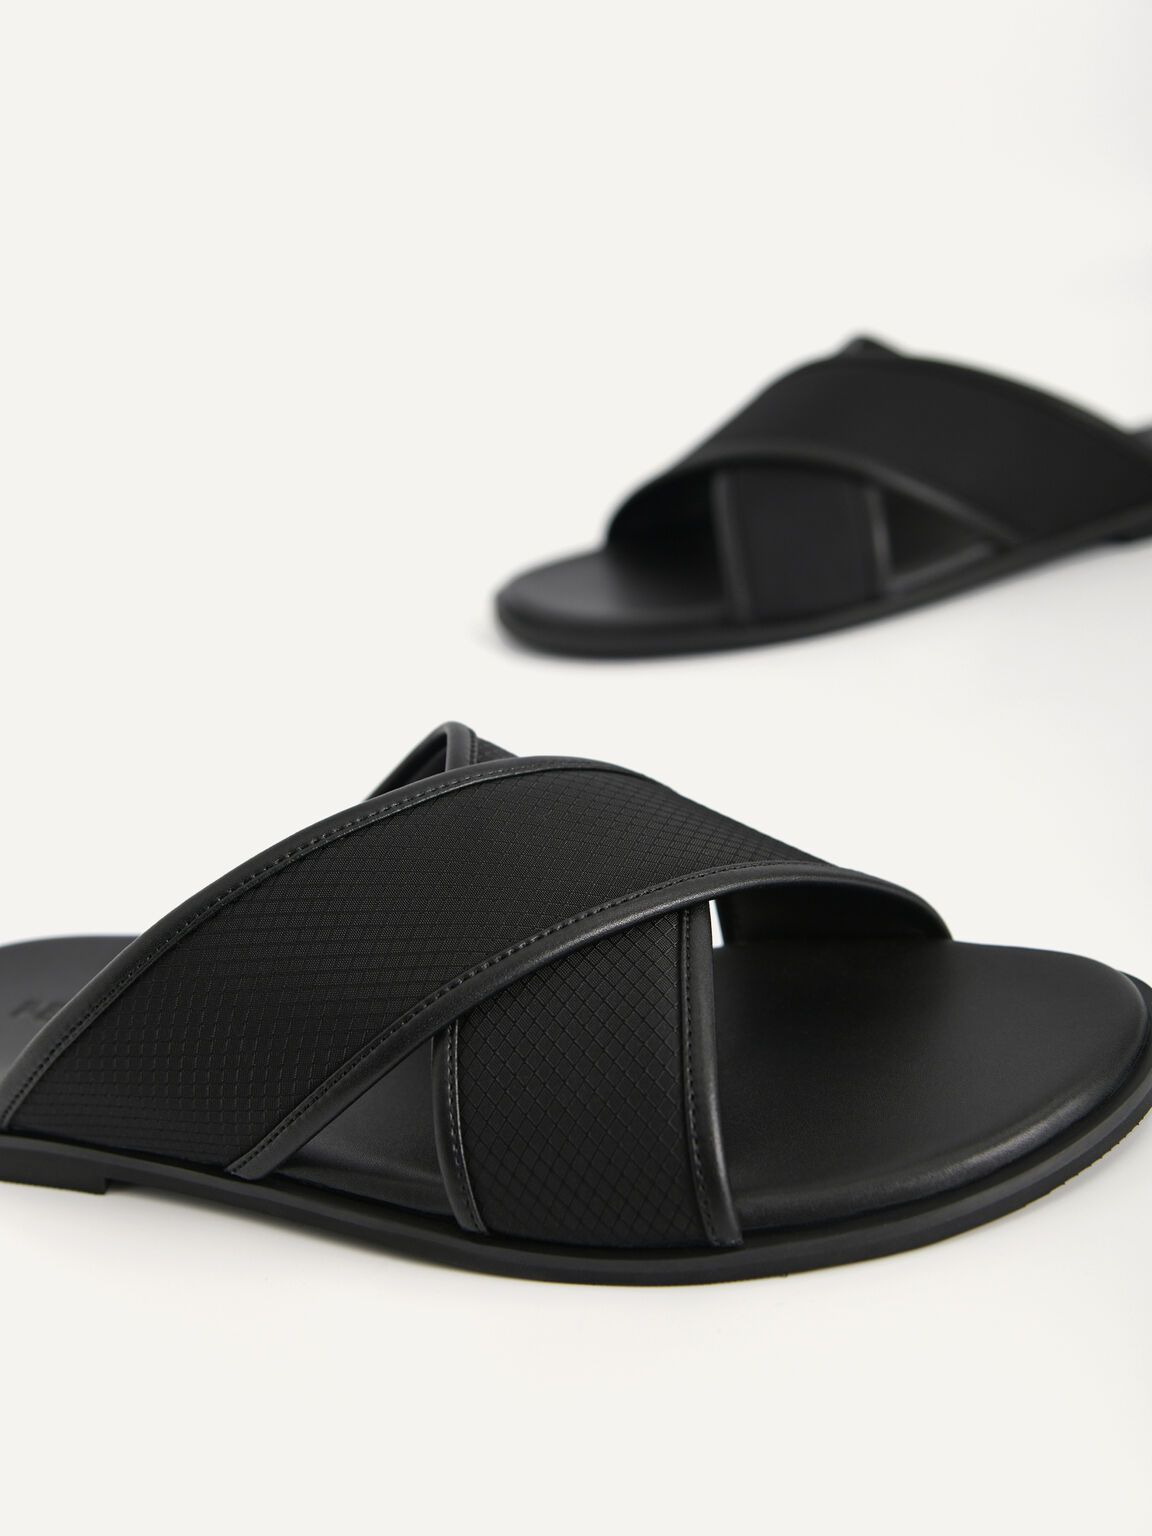 Criss-Cross Strap Sandals, Black